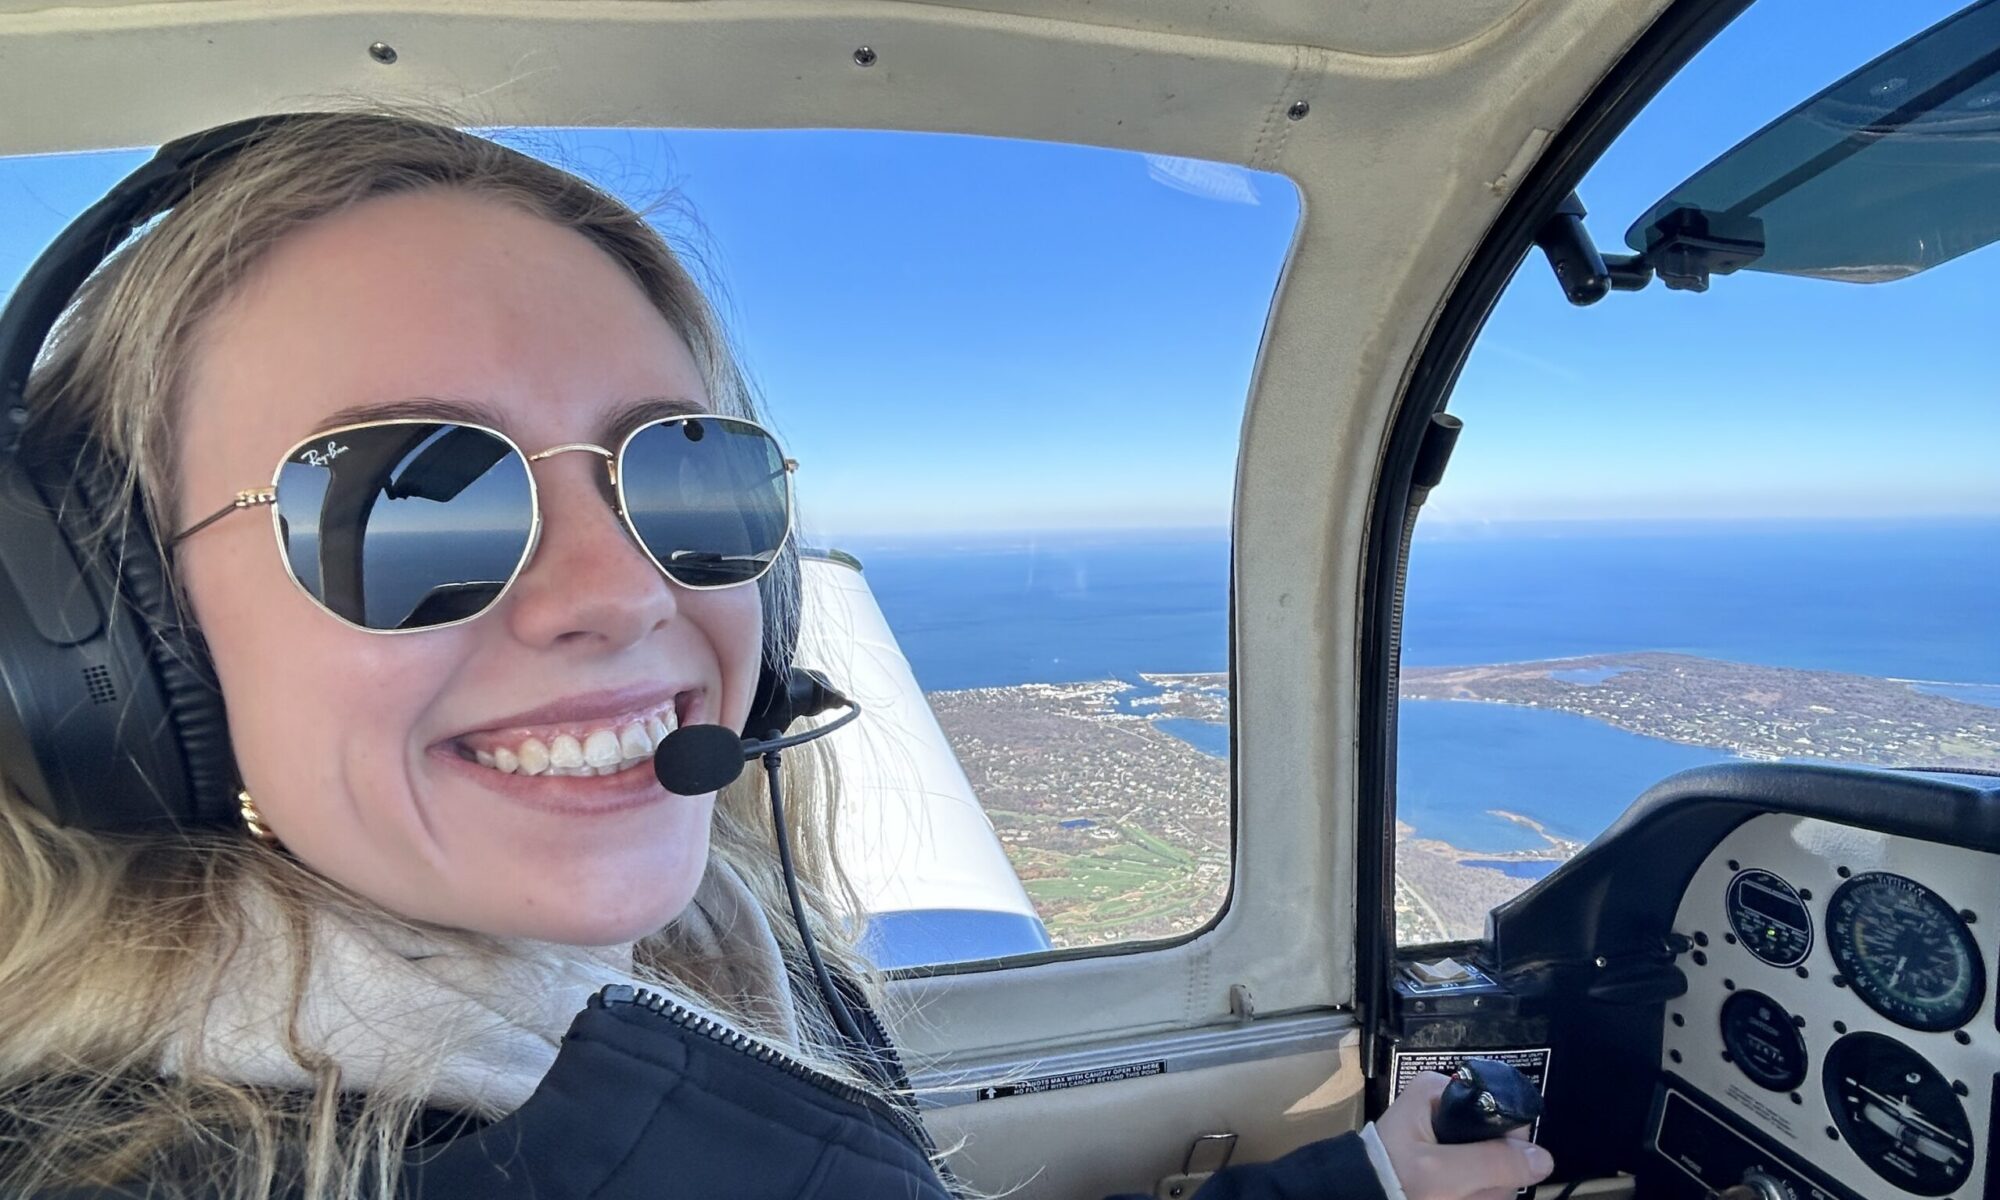 Green Mountain Flight Training student Luci Horrocks